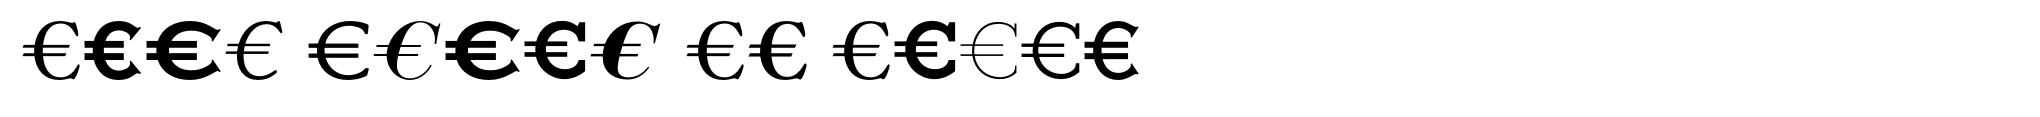 Euro Serif EF Eight image